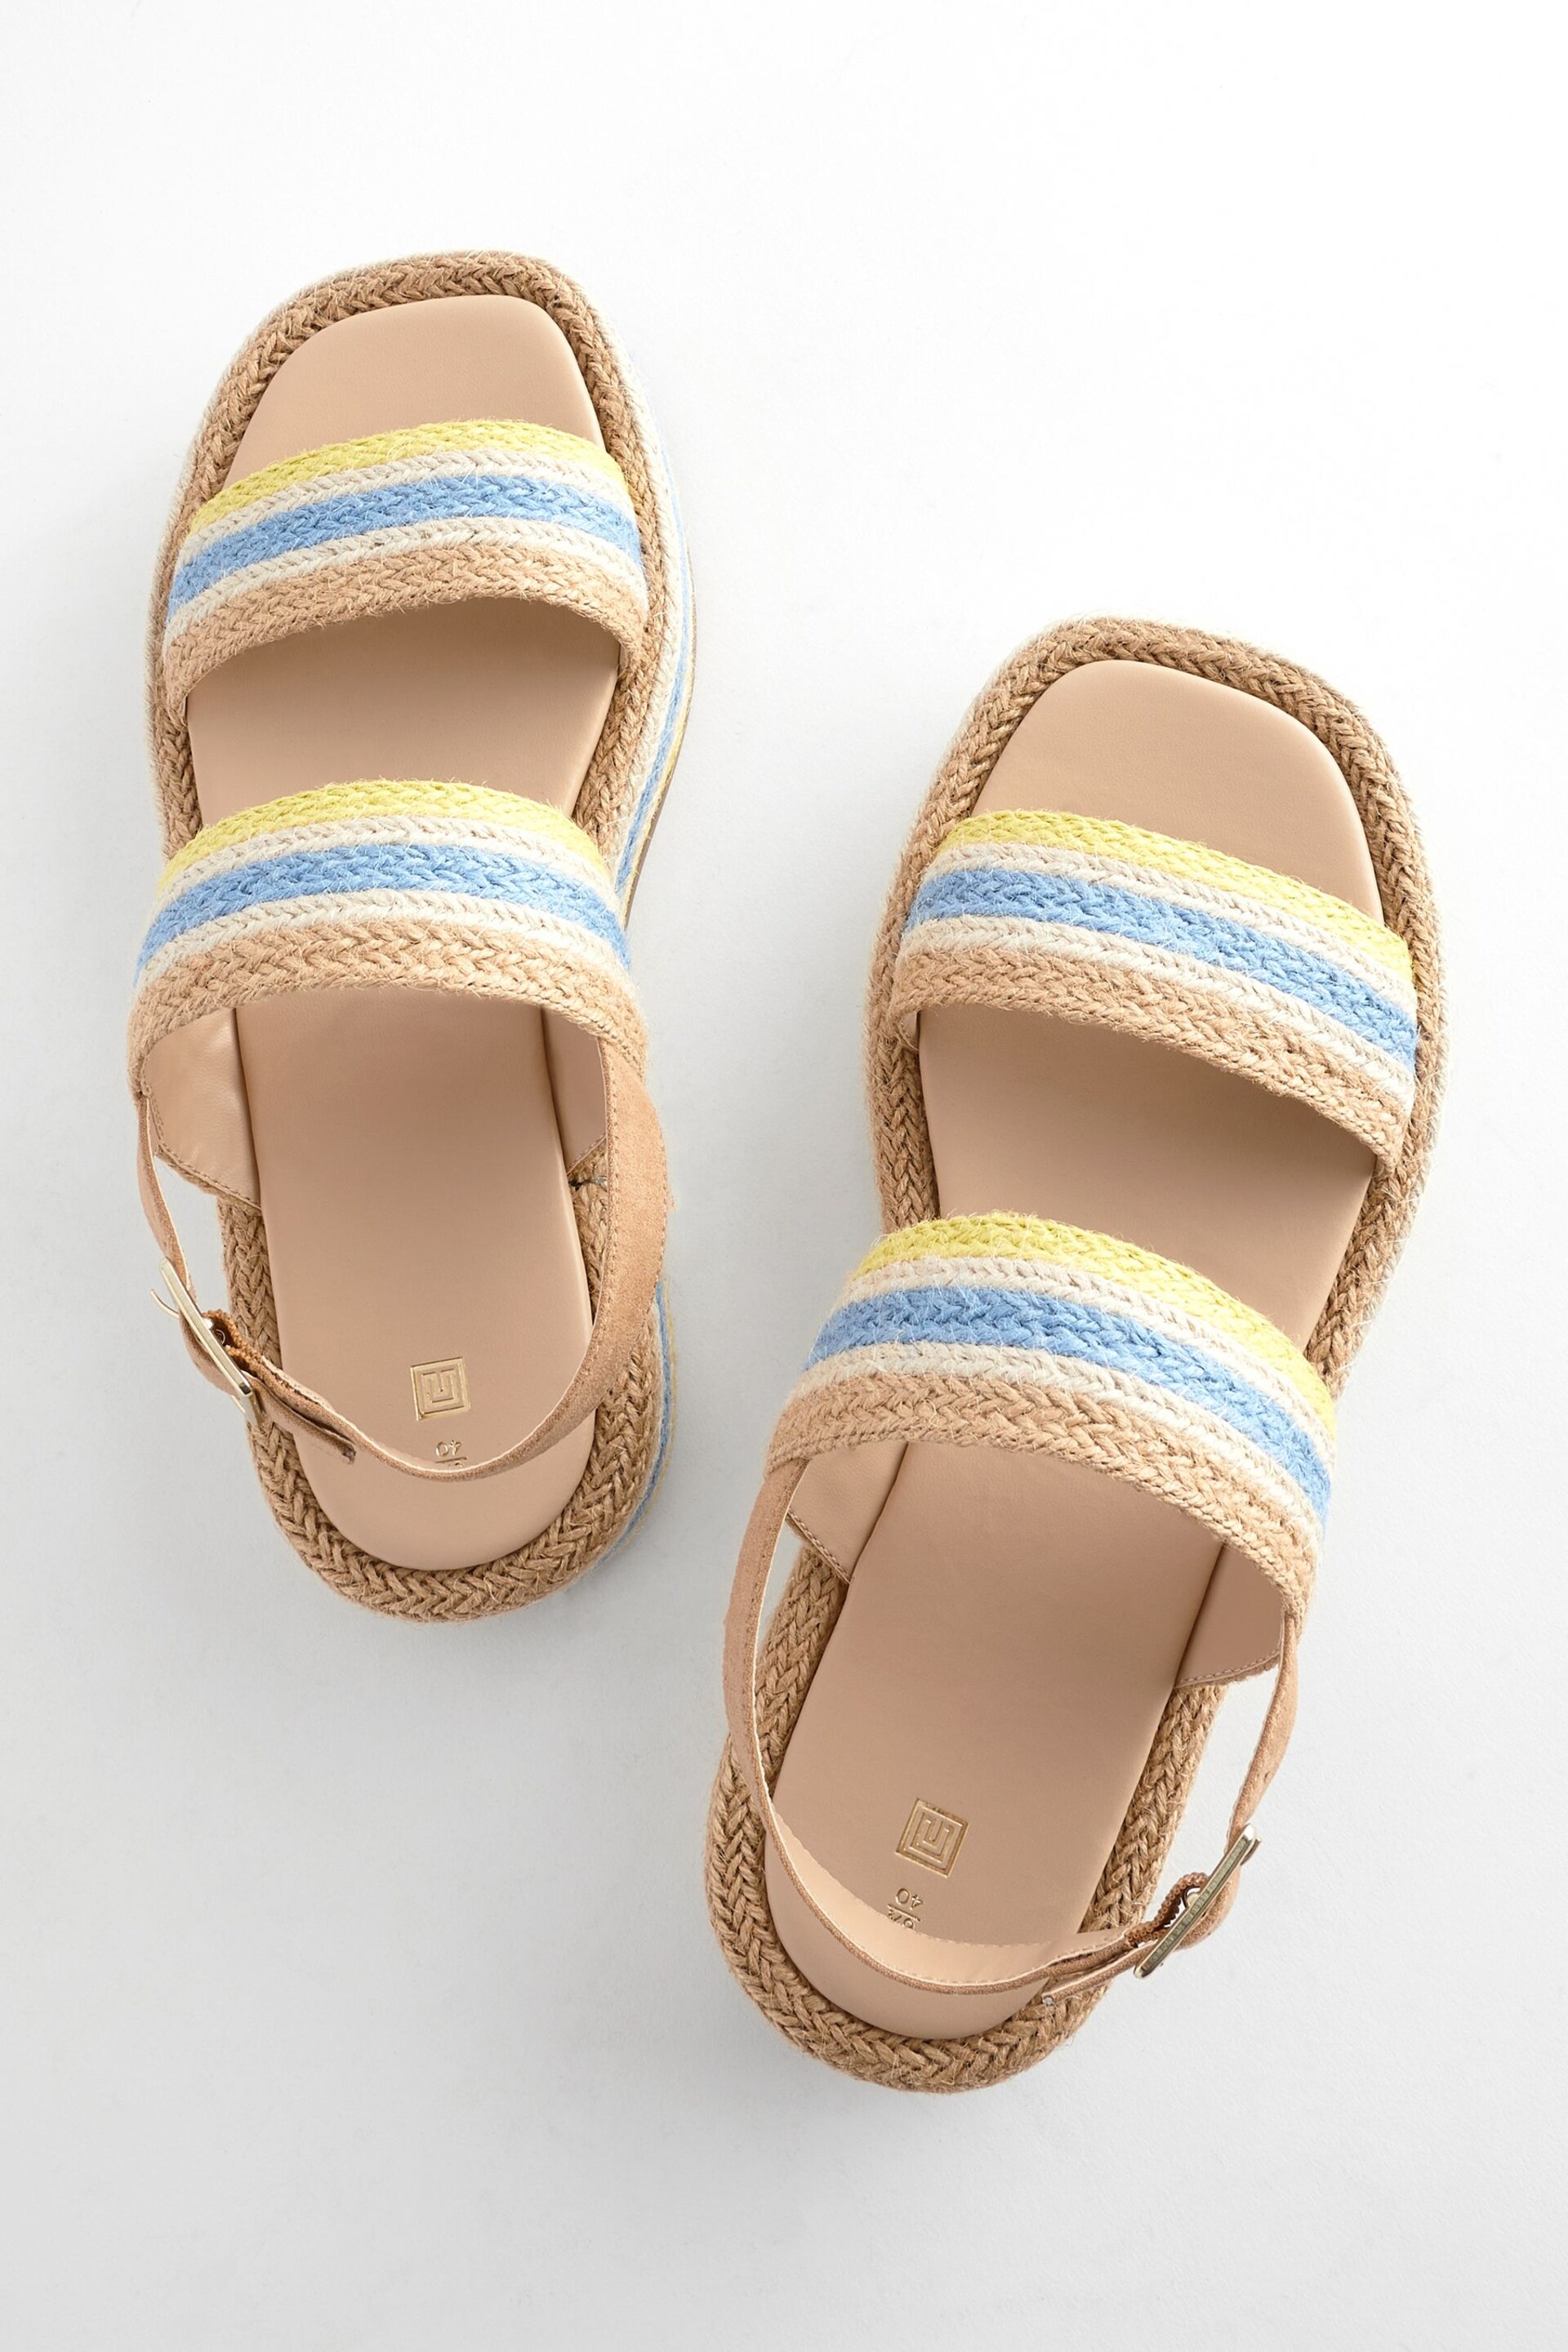 Blue/Yellow Espadrille Flatform Sandals - Image 8 of 8